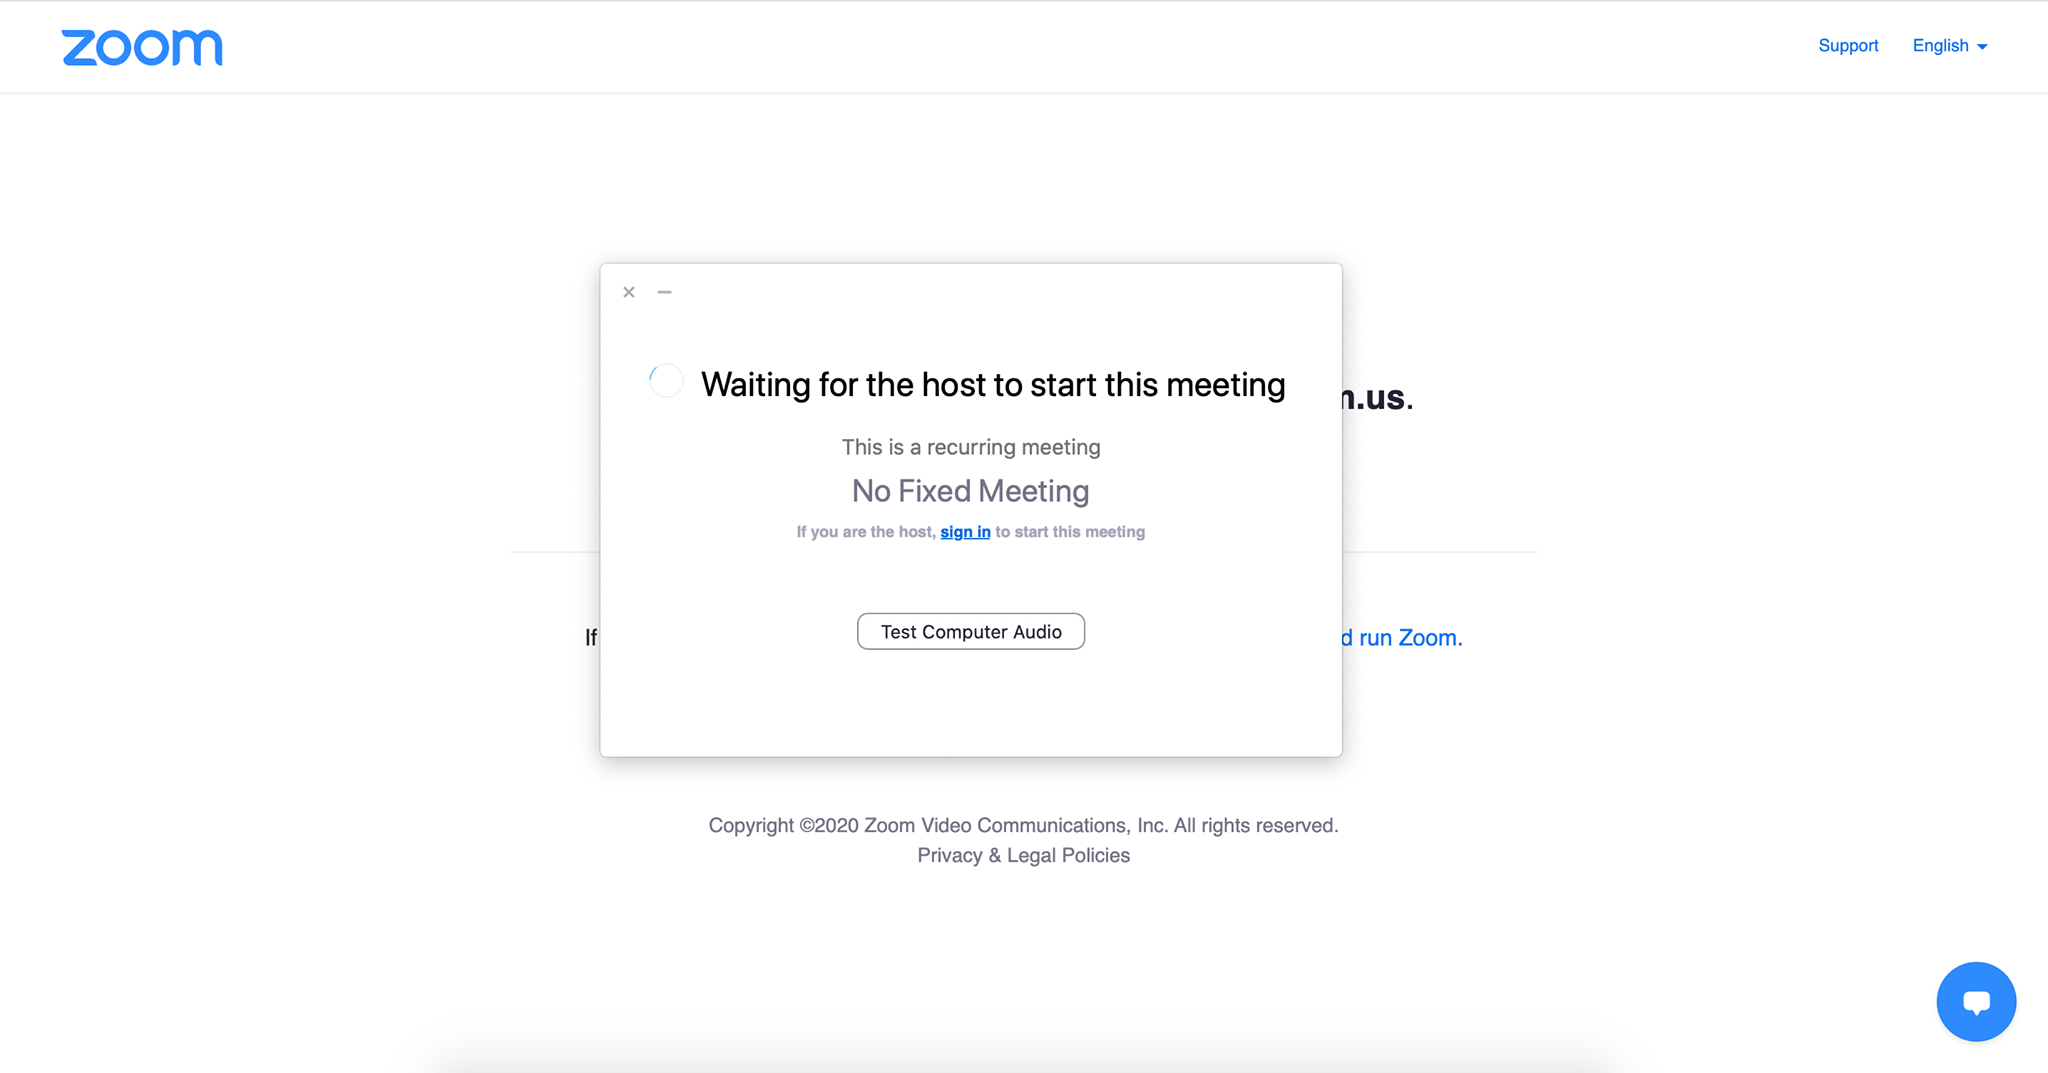 Fixed Meeting Waiting